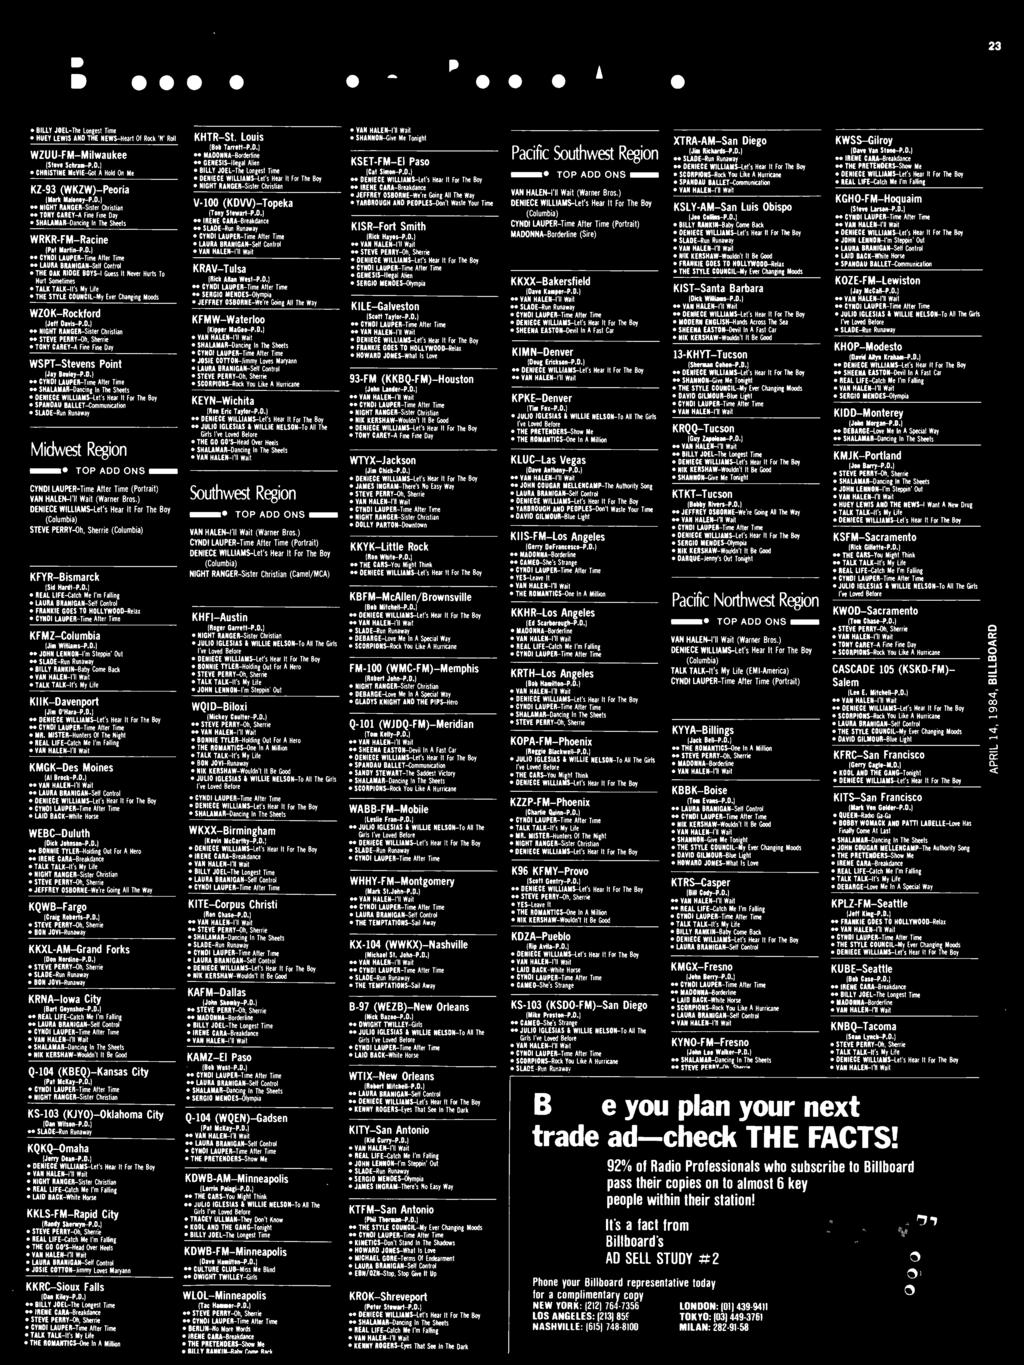 Billboard R Singles Radio Based on station playlists through Tuesday (4/3/84) Ploylist lop Add Ons 23 BILLY JOEL -The Longest Time HUEY LEWIS AND THE NEWS -Heart Of Rock 'N' Roll WZUU- FM- Milwaukee